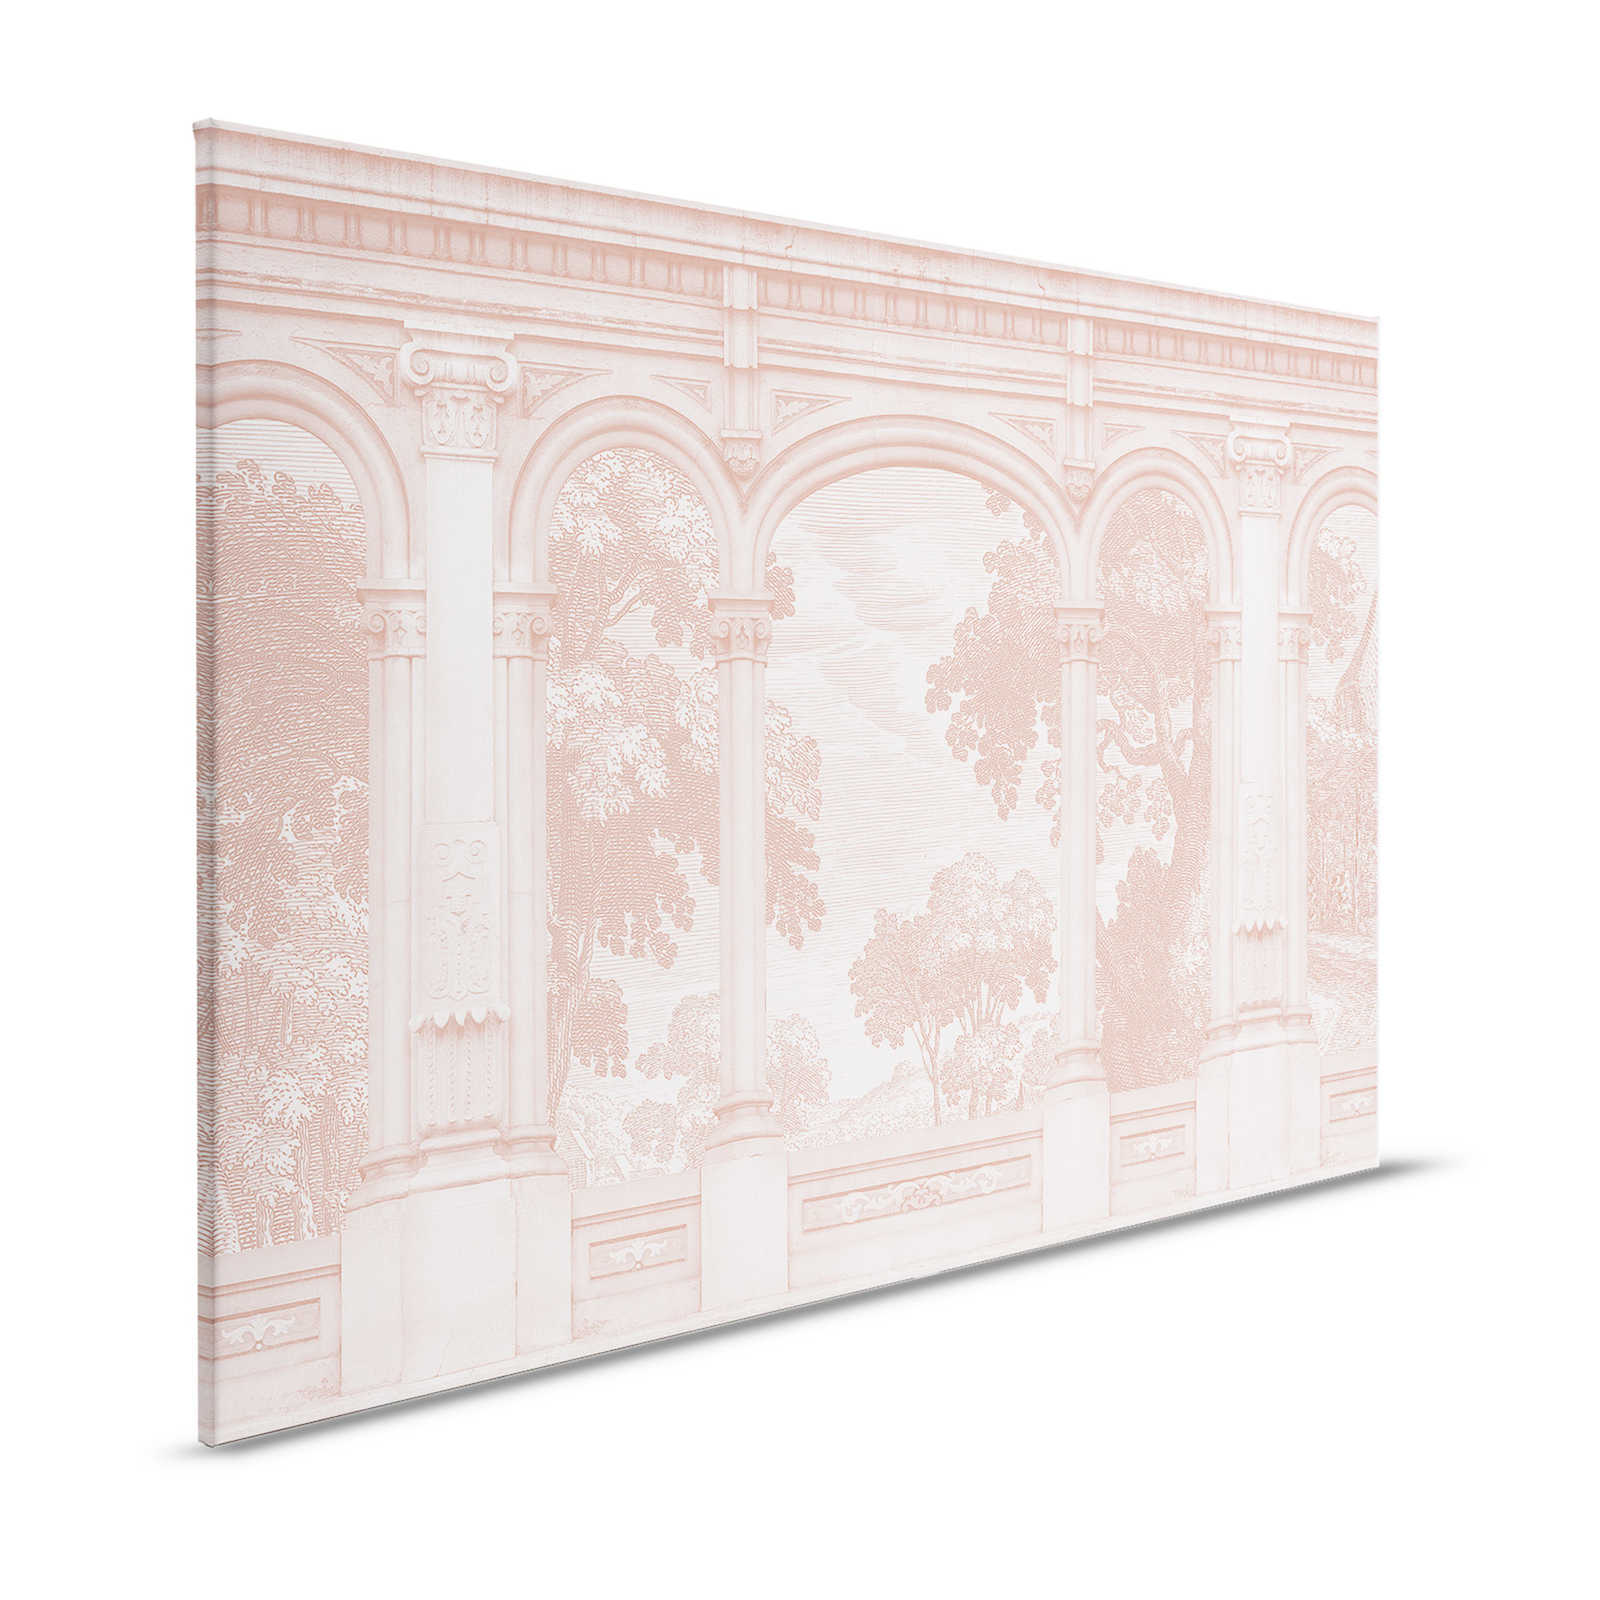 Roma 3 - Roze Canvas schilderij Historisch ontwerp met rond boogvenster - 1.20 m x 0.80 m
